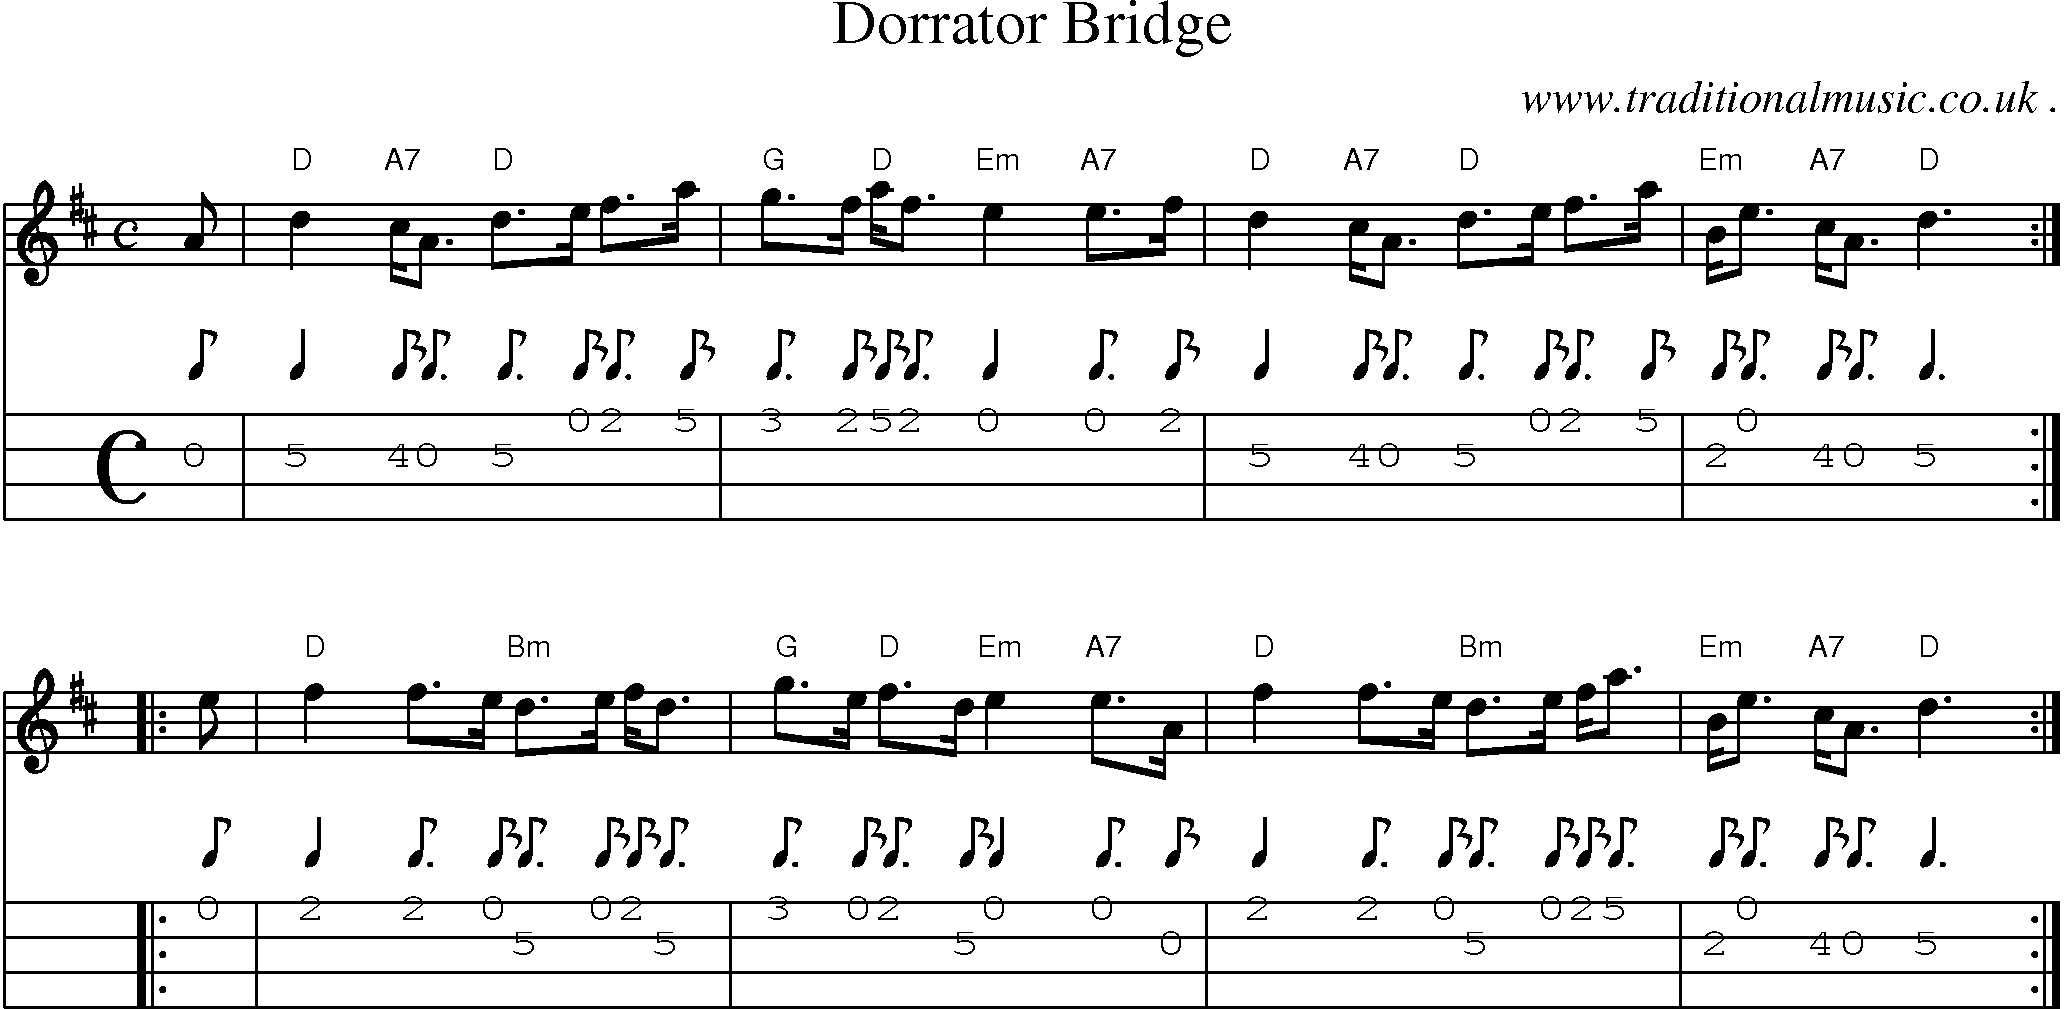 Sheet-music  score, Chords and Mandolin Tabs for Dorrator Bridge